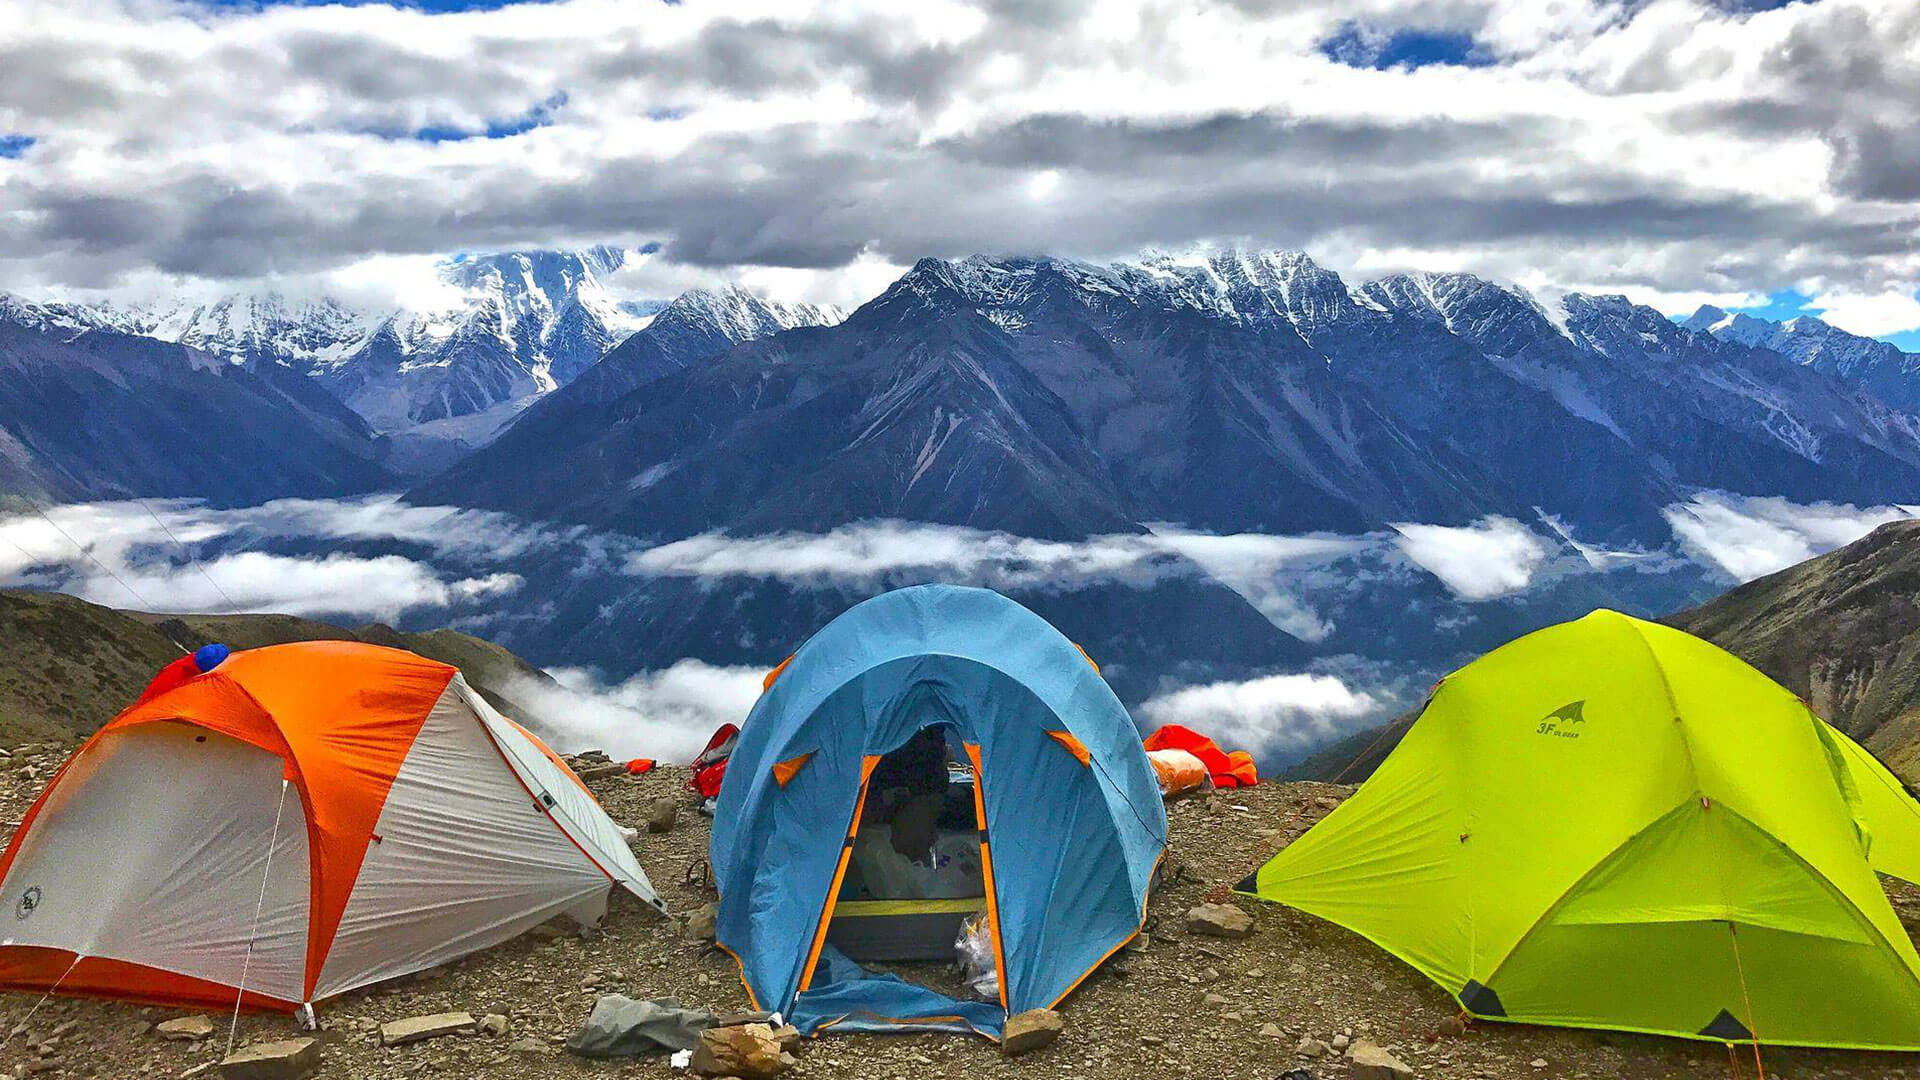 tents put up against a mountainous backdrop
